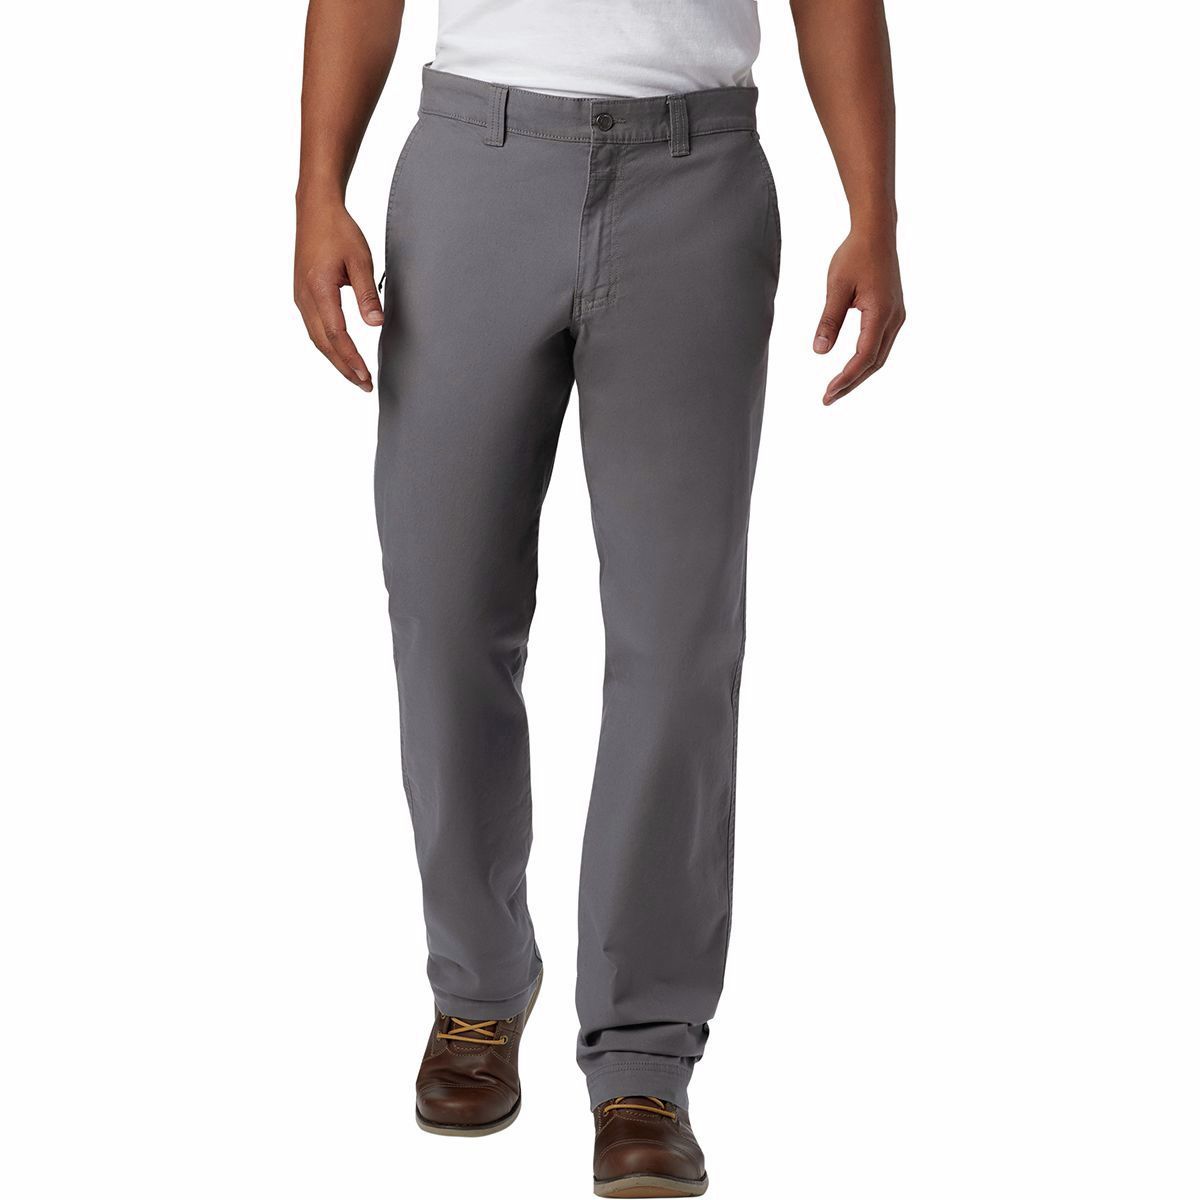 Columbia Sportswear Mens Flex Roc Woven Outdoor Hiking Khaki Pants BHFO 5563 